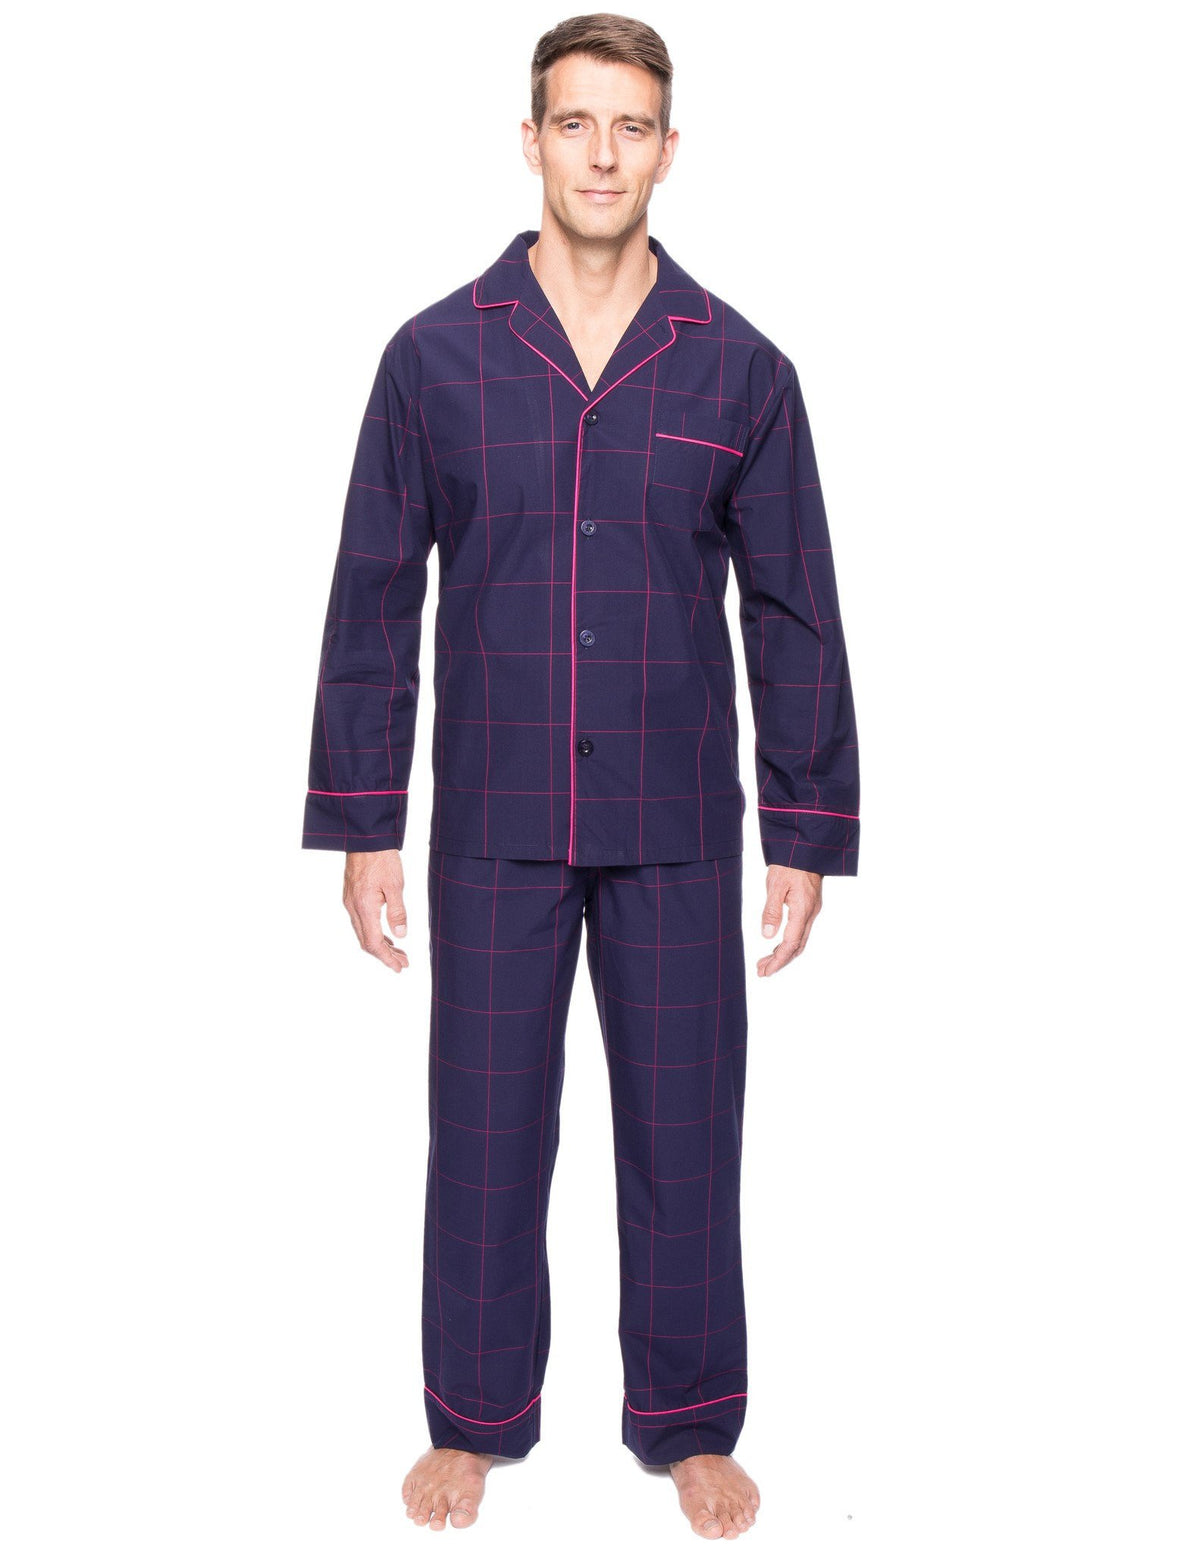 Men's Premium 100% Cotton Woven Pajama Sleepwear Set - Windowpane Checks Blue/Red